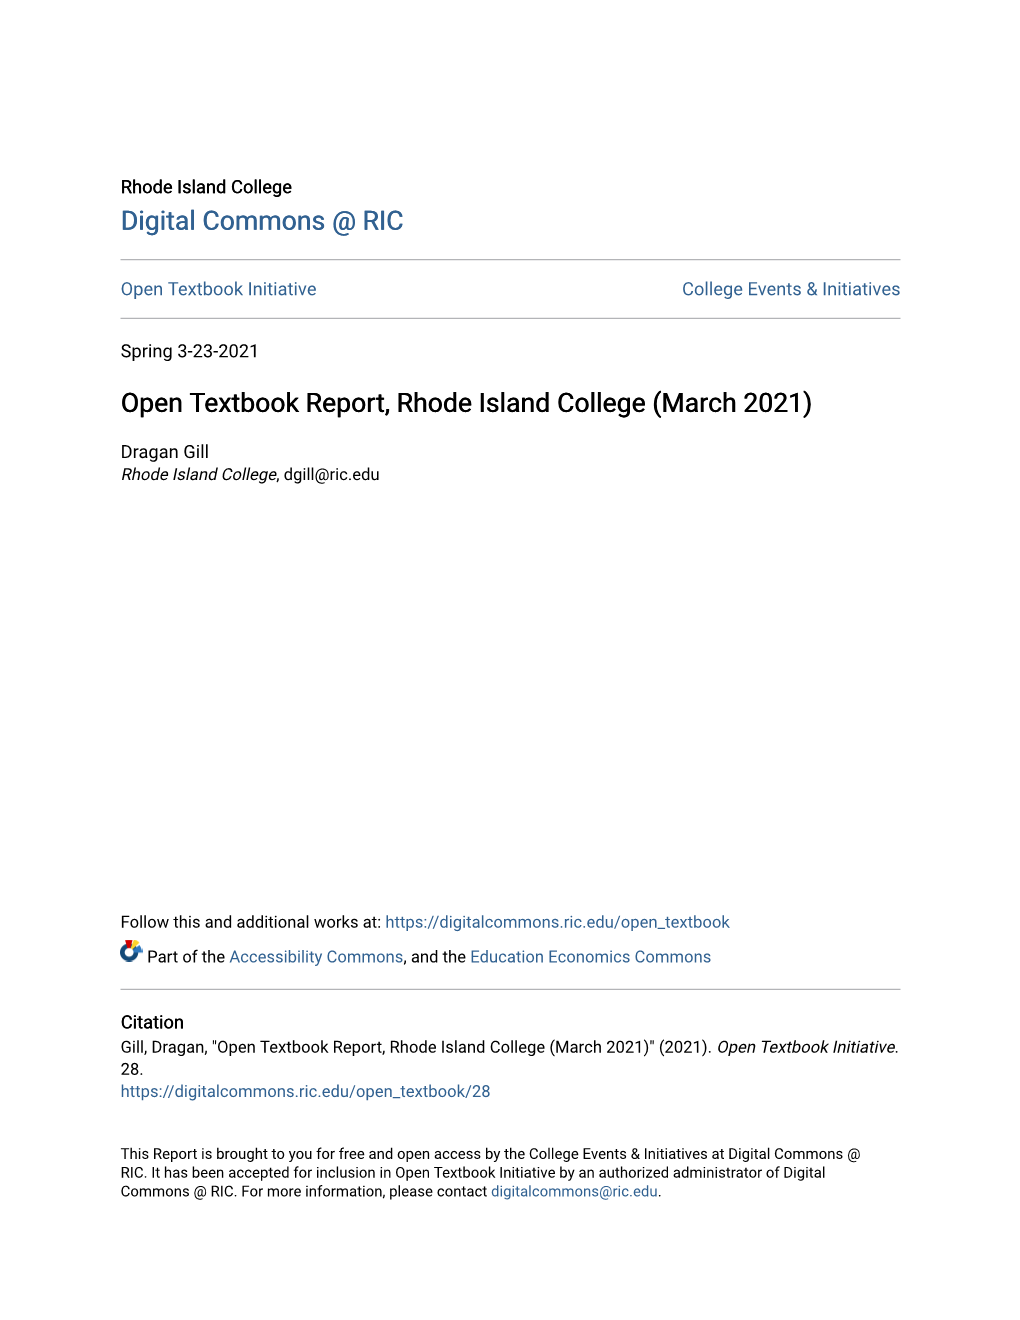 Open Textbook Report, Rhode Island College (March 2021)